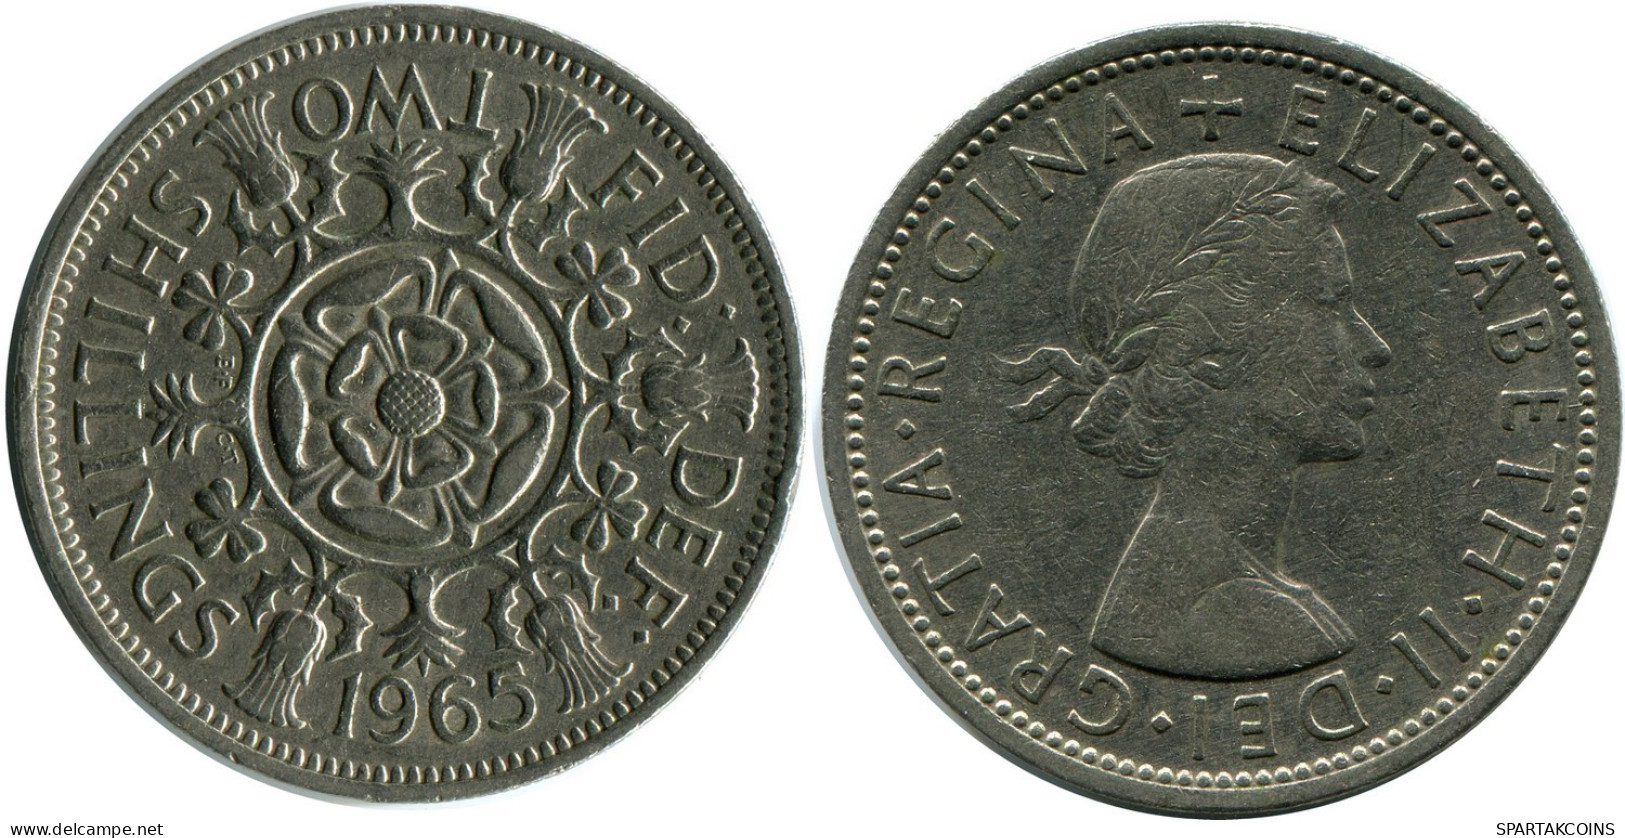 2 SHILLING 1965 UK GROßBRITANNIEN GREAT BRITAIN Münze #AY997.D.A - J. 1 Florin / 2 Shillings